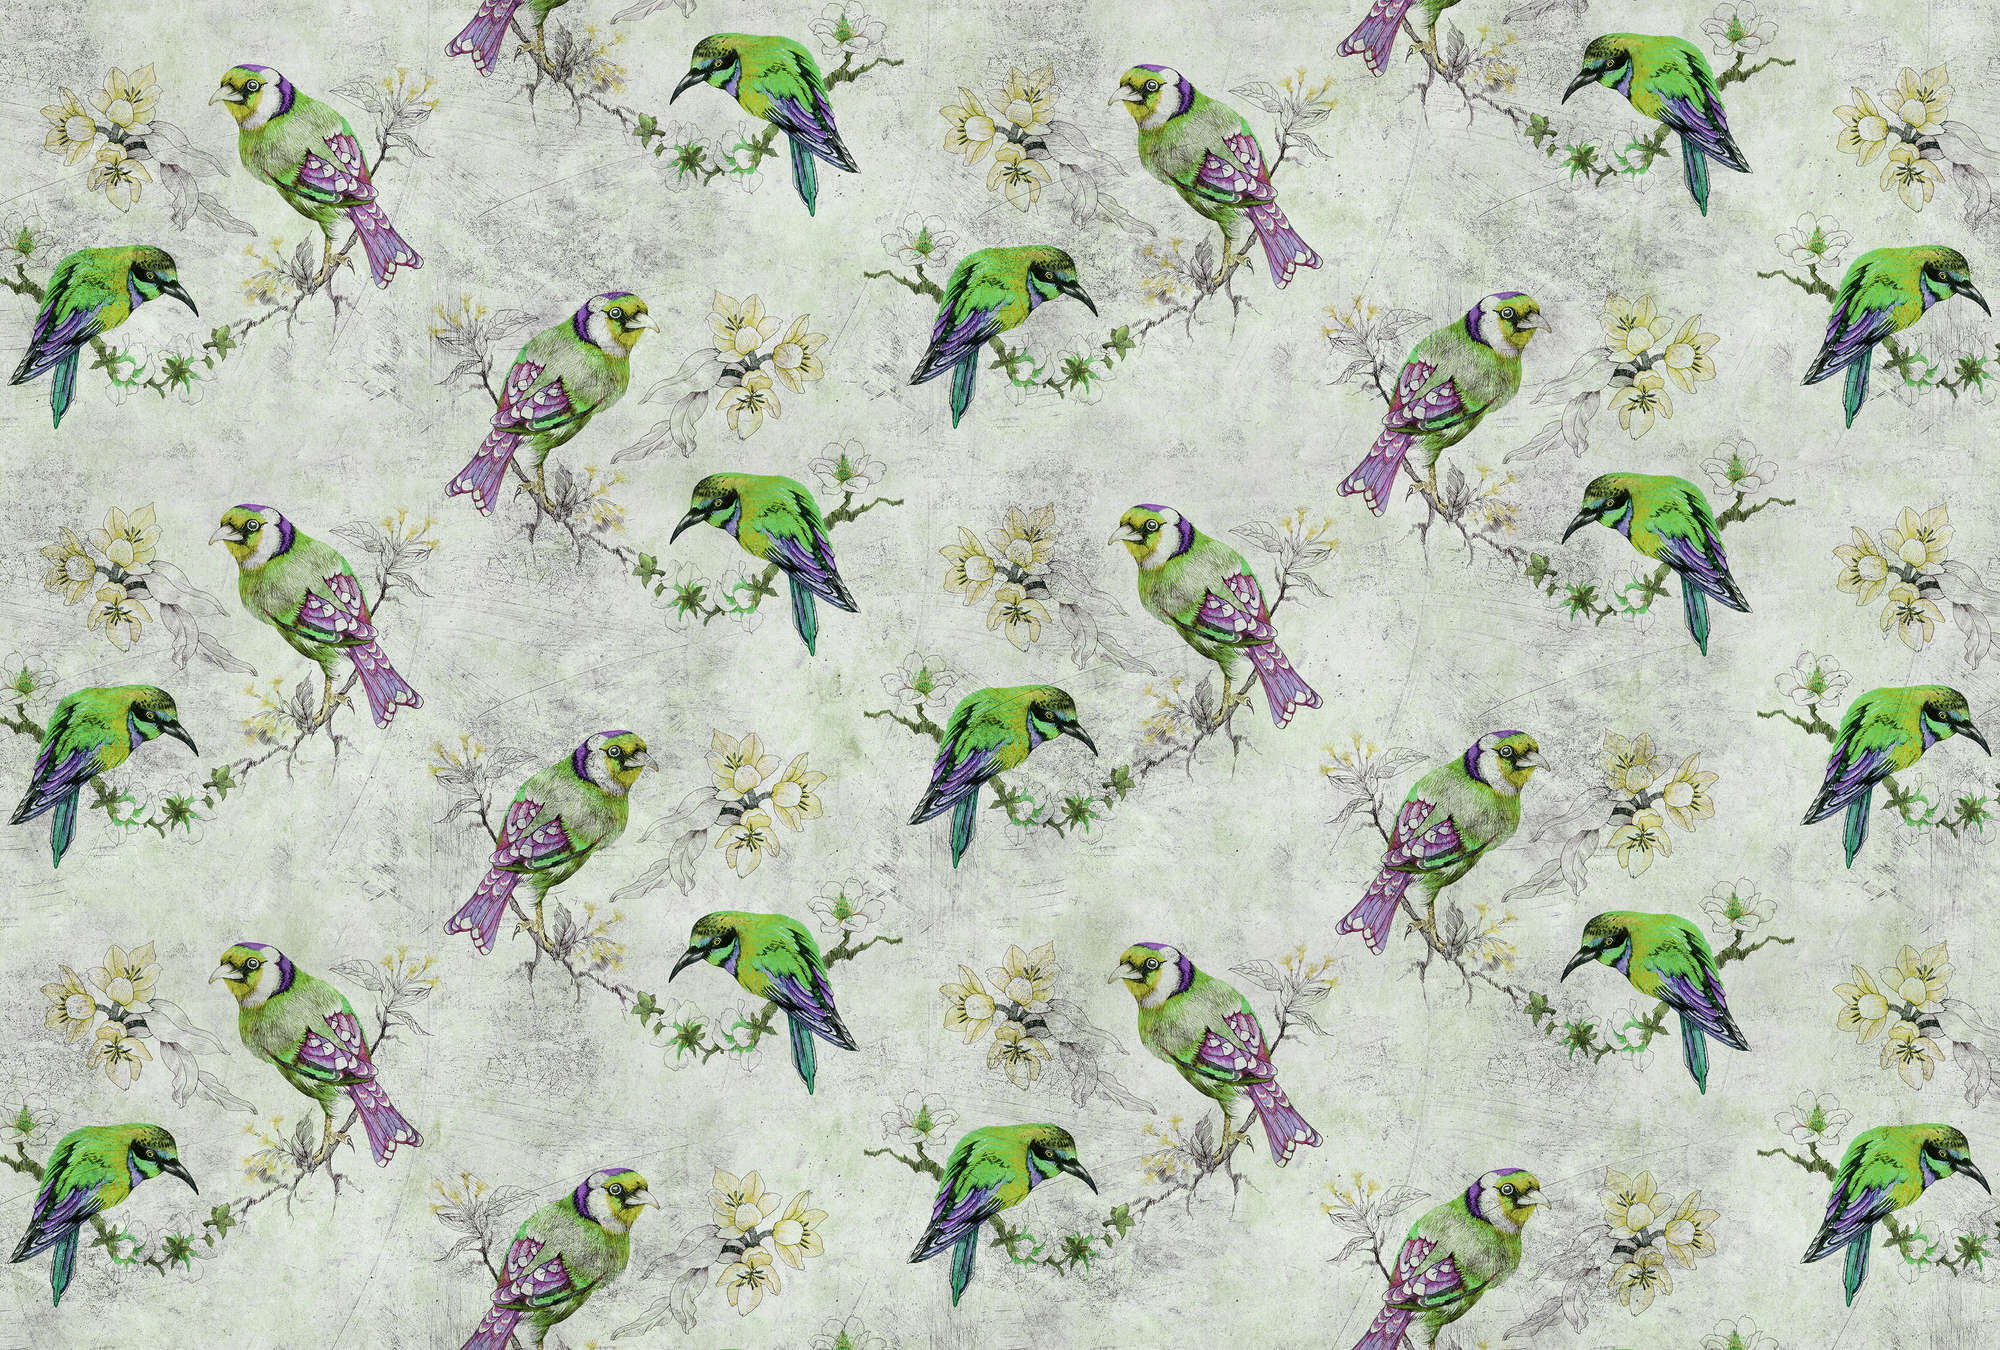             Pájaros del amor 2 - Papel pintado fotográfico colorido en estructura rayada con pájaros esbozados - Gris, Verde | Perla vellón liso
        